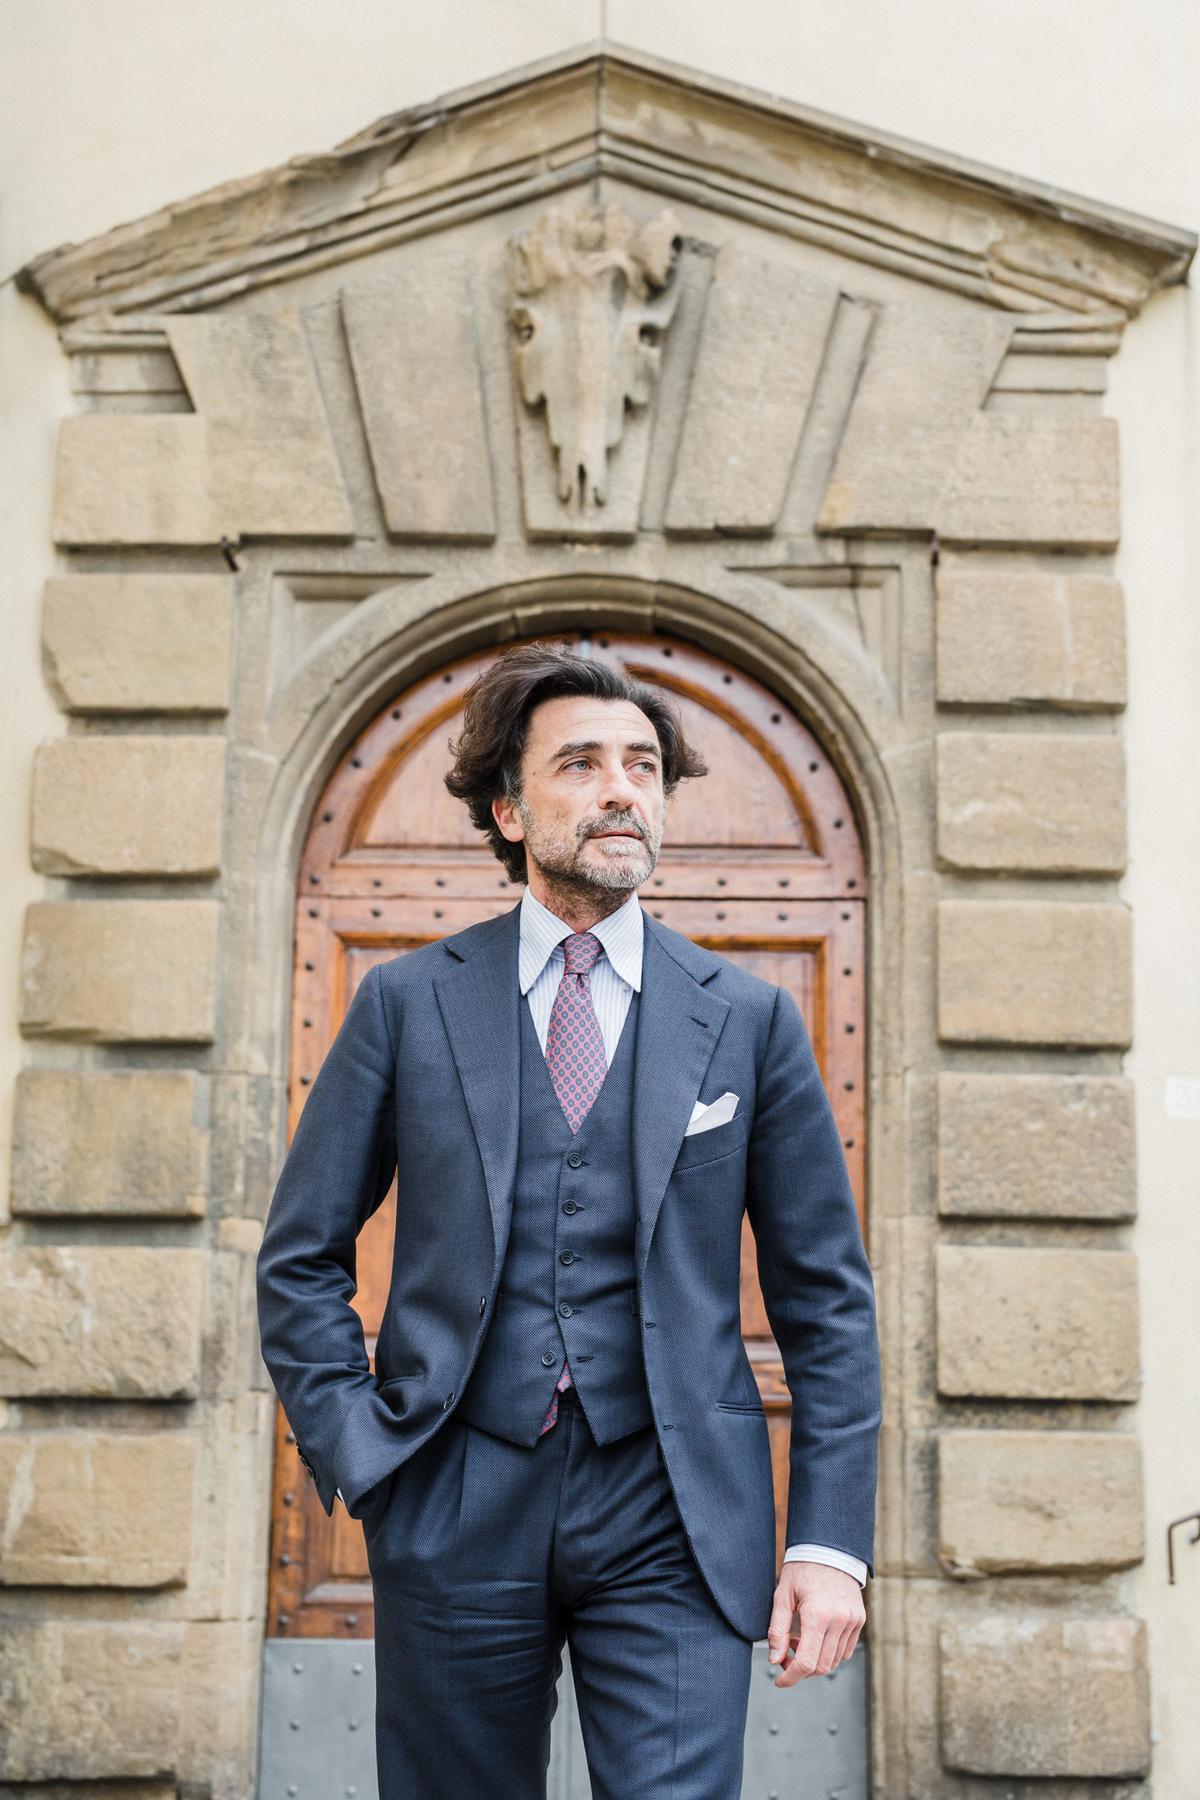 Tommaso Capozzoli, partner and brand ambassador at Sartoria Vestrucci, wears a bespoke three-piece suit ($5,600). (Courtesy of Sartoria Vestrucci)